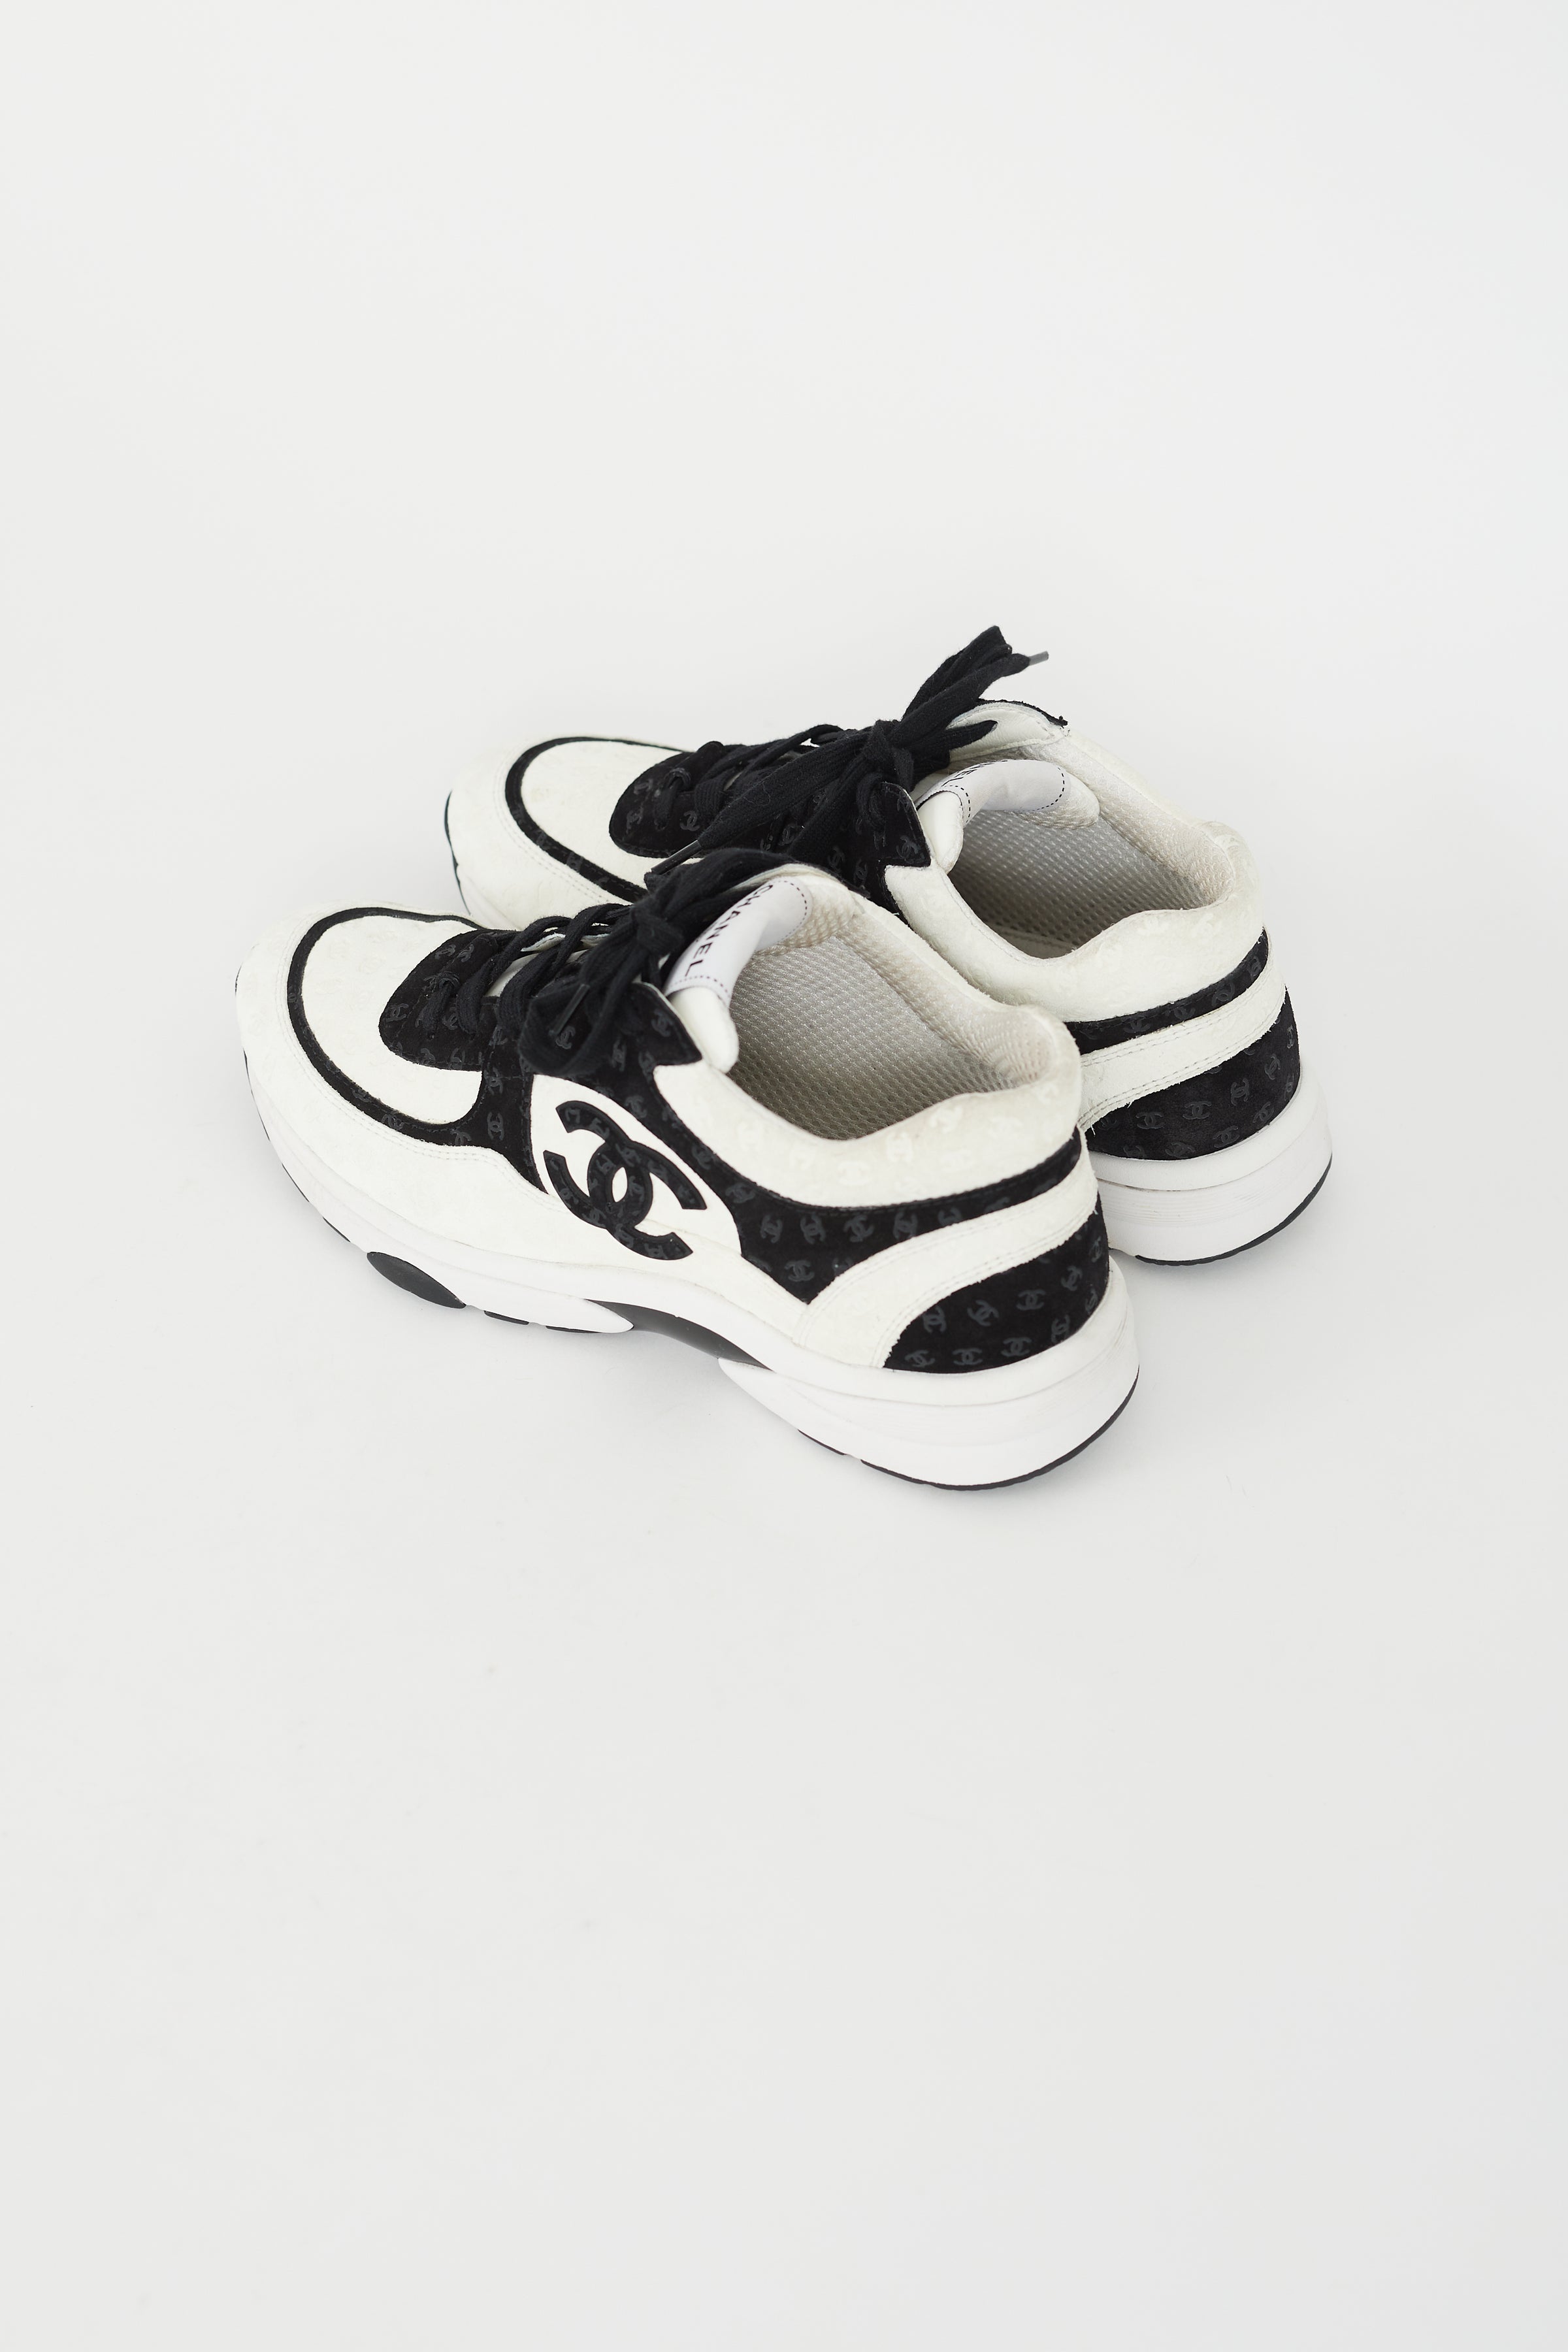 Chanel Logo Sneaker 'Black White